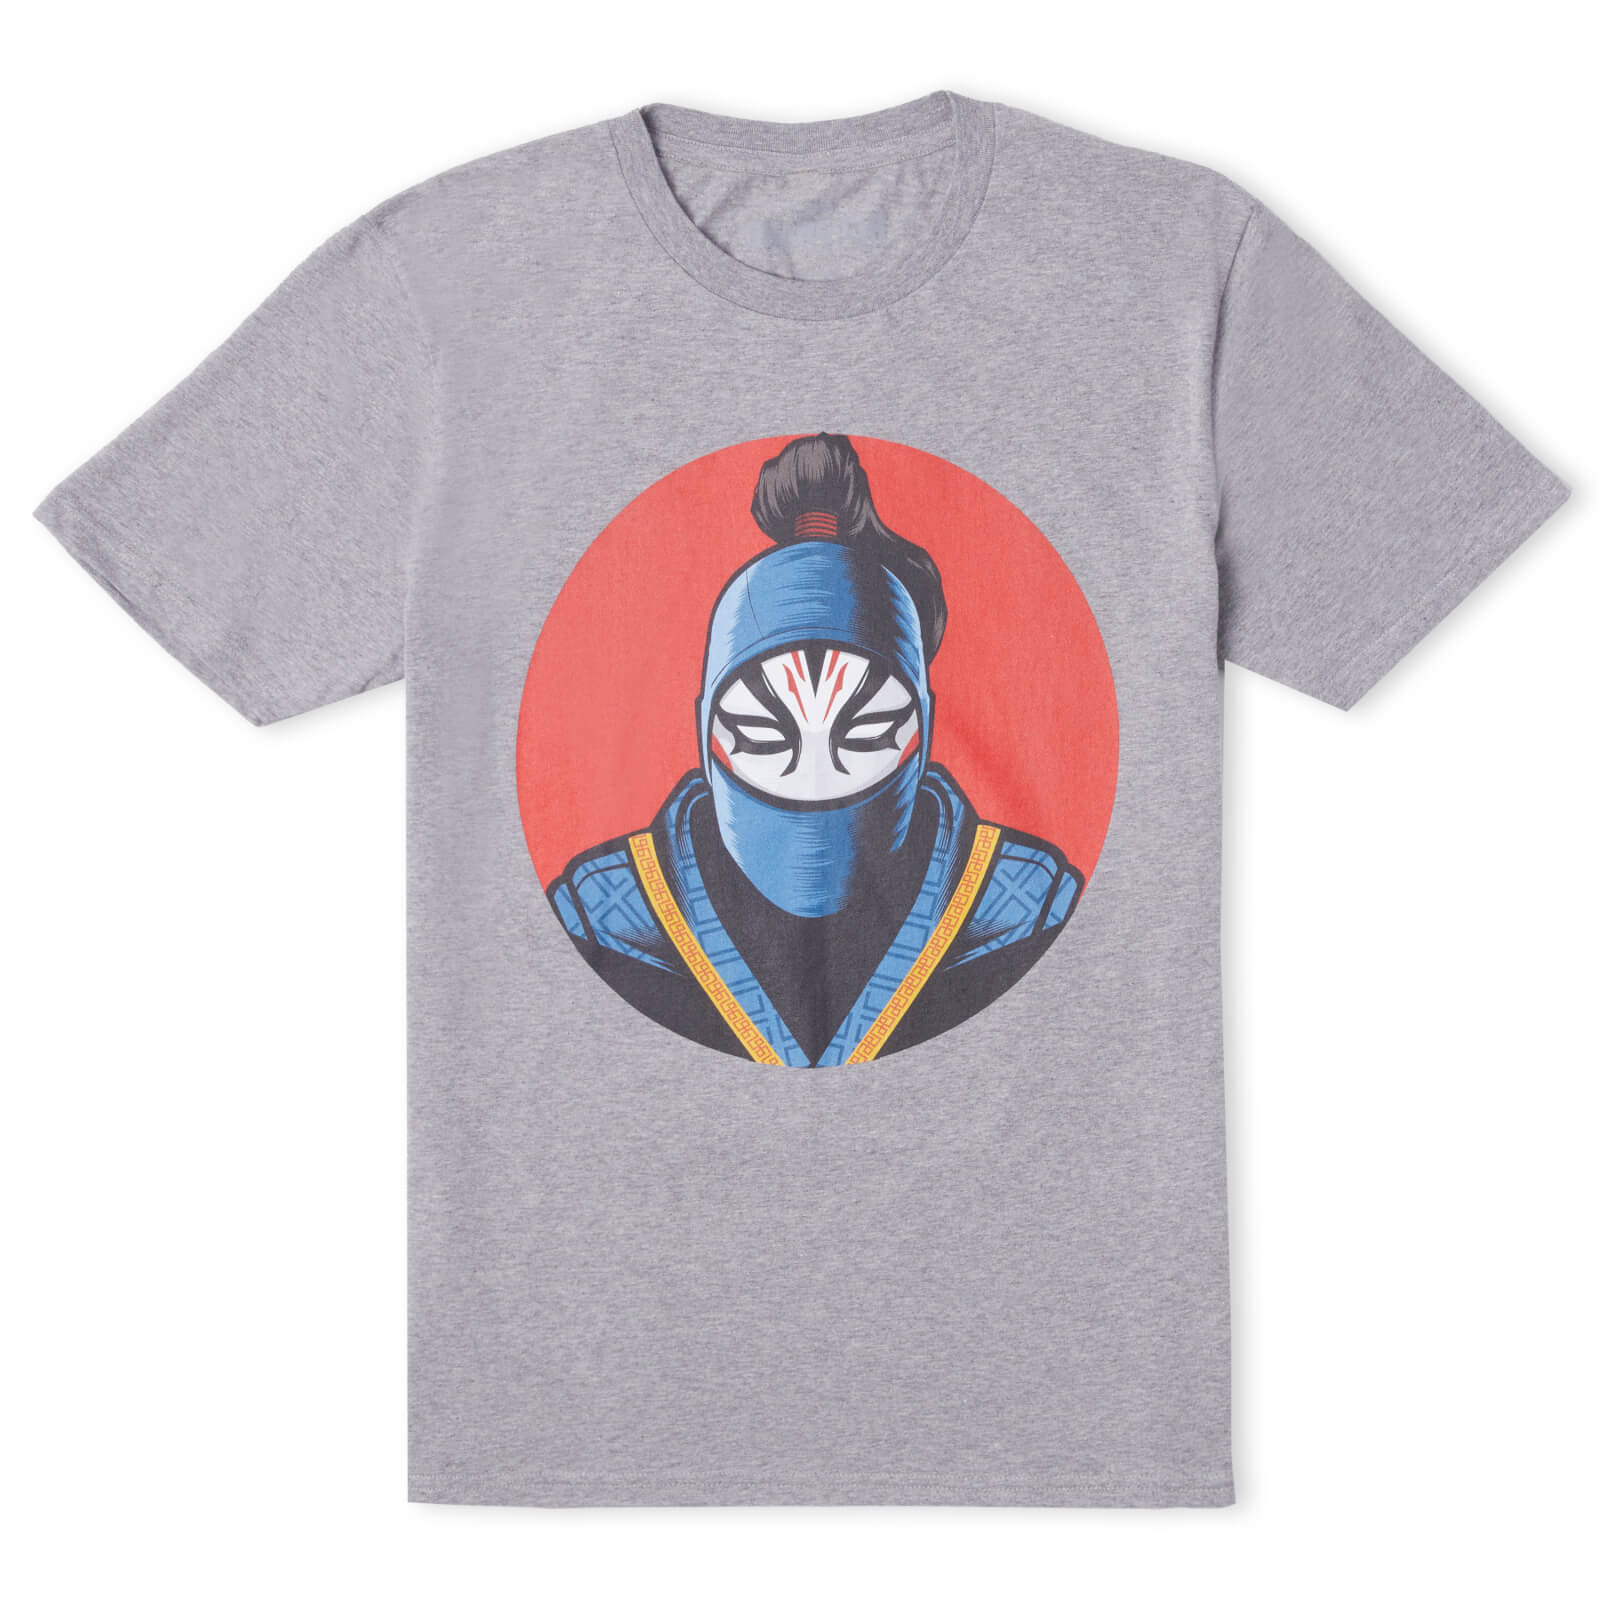 Shang-Chi Face Covered Women's T-Shirt - Grey - XS - Grey